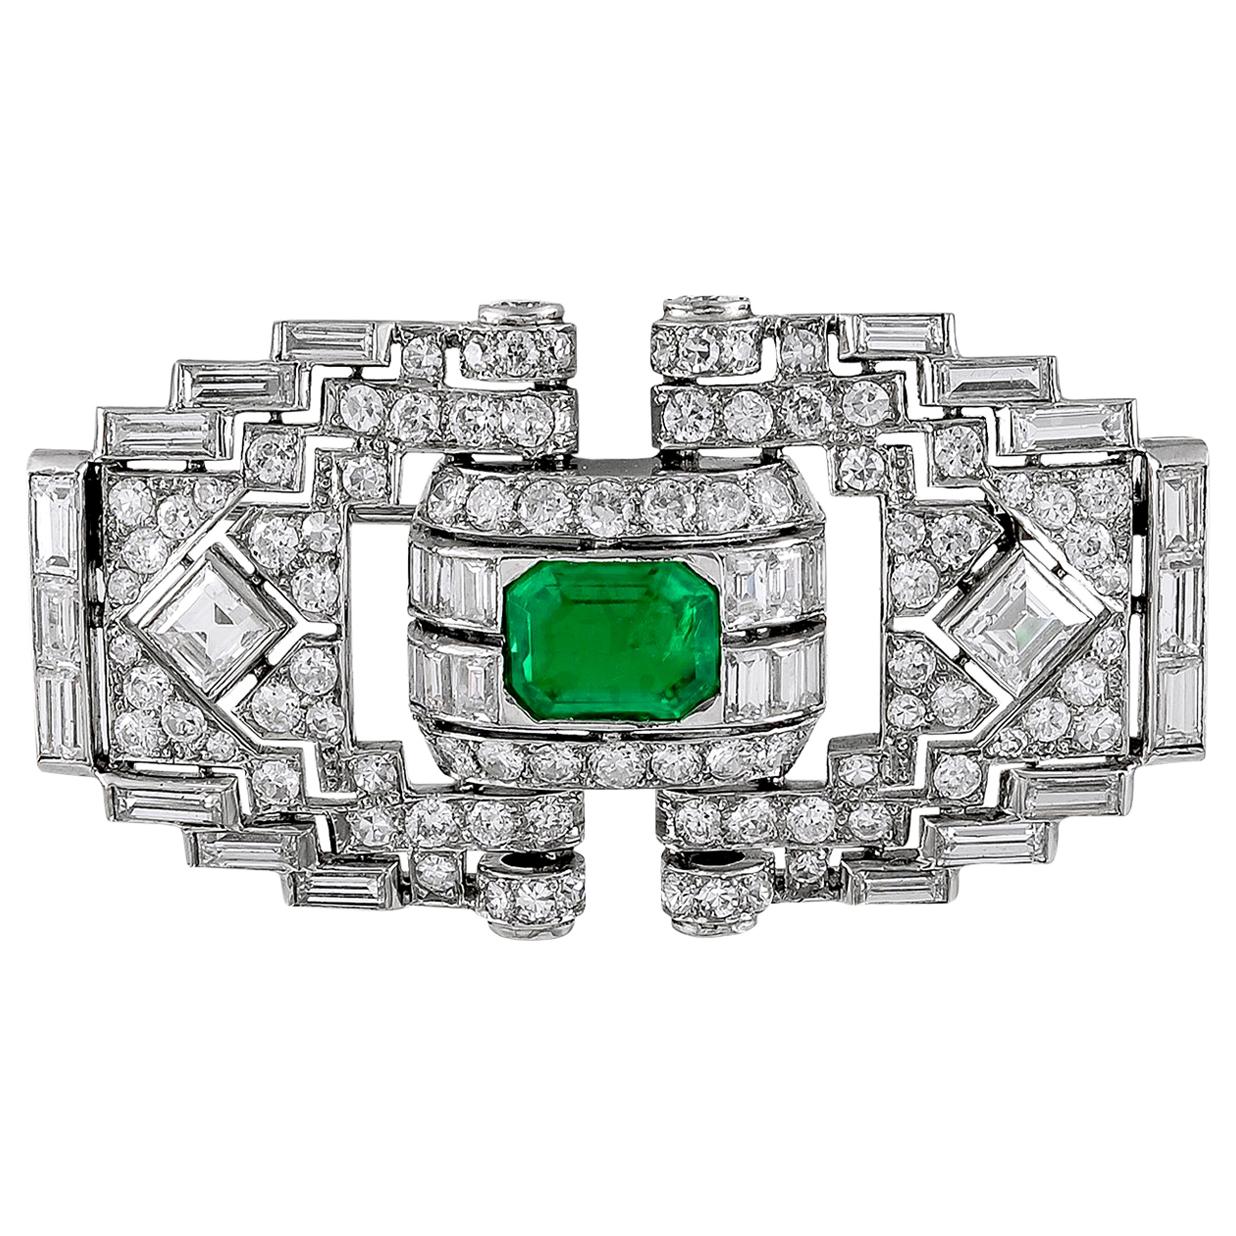 Mauboussin Diamond Emerald Brooch